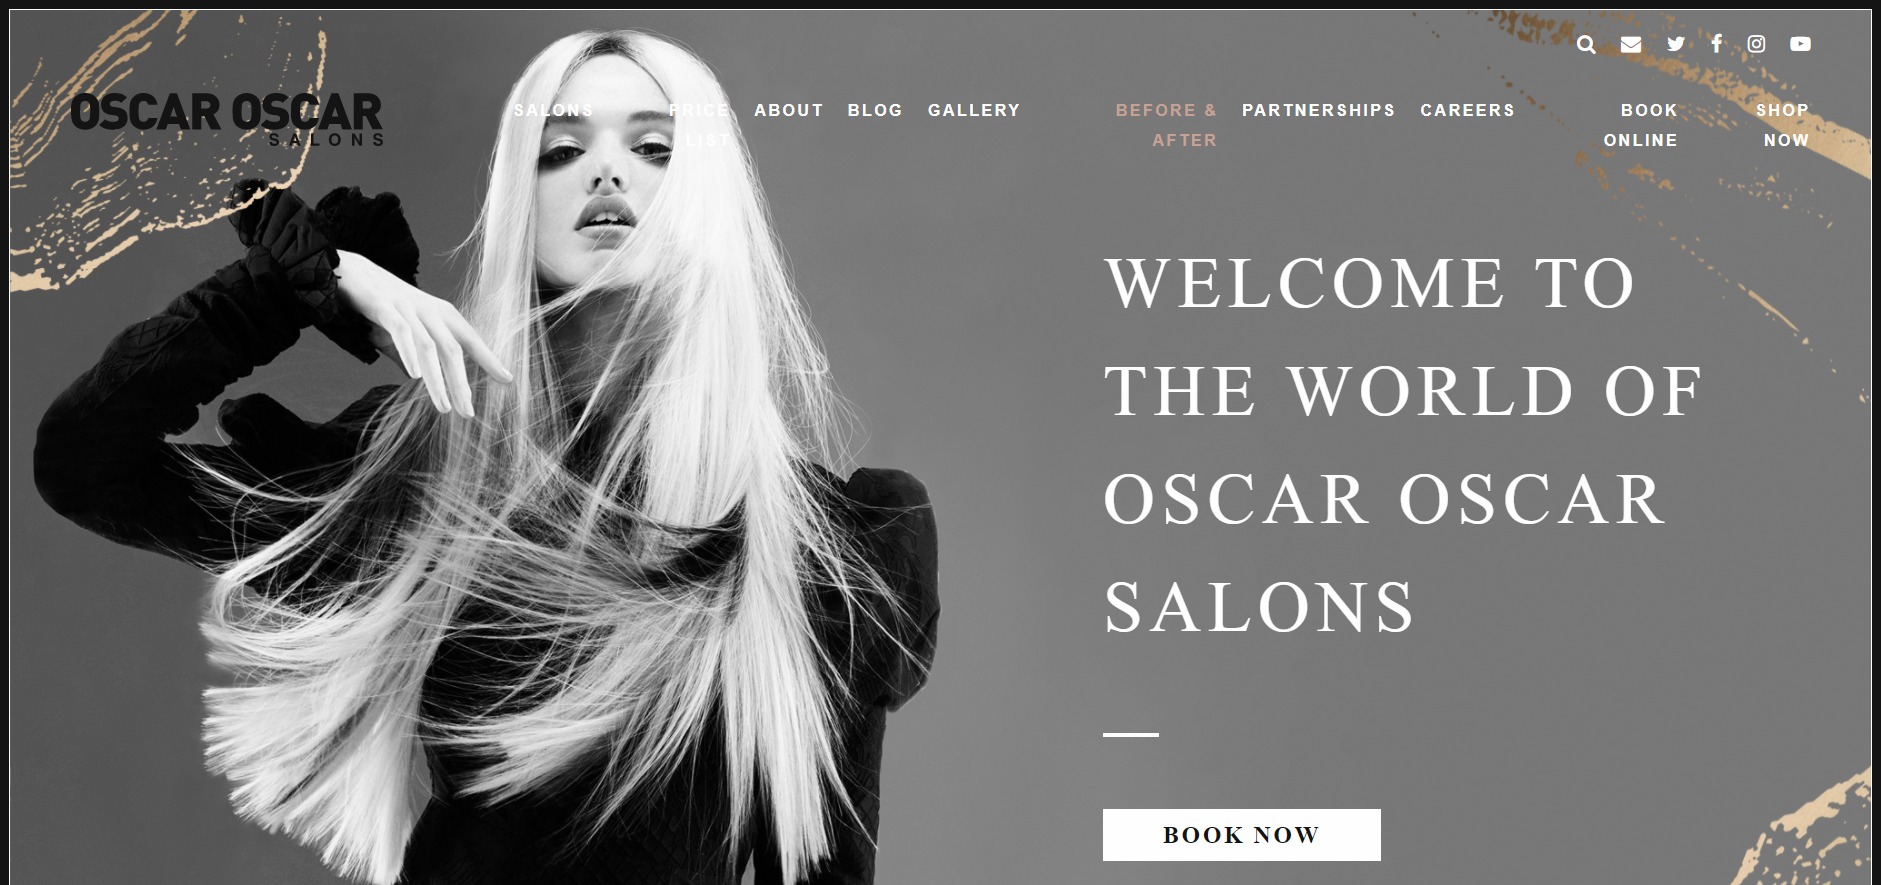 hair salon book online melbourne